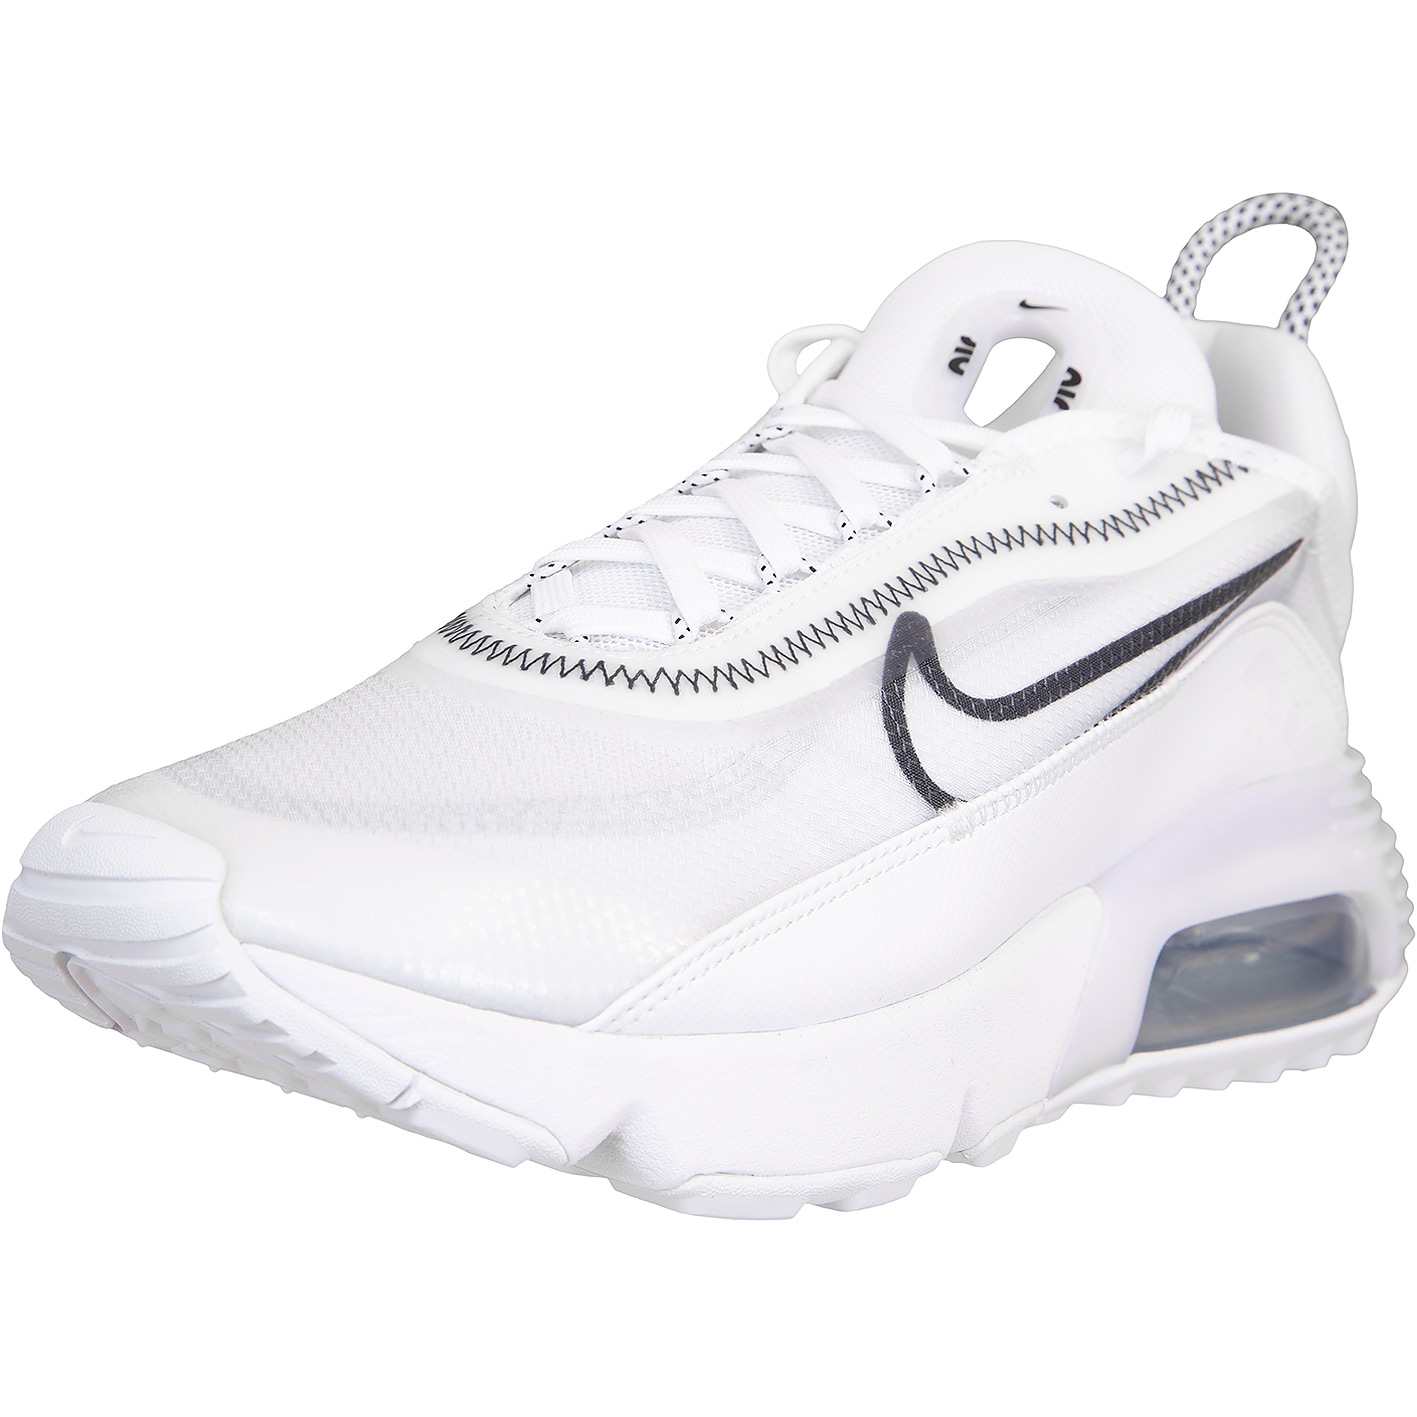 ☆ Nike Air Max 2090 Damen Sneaker weiß - hier bestellen!